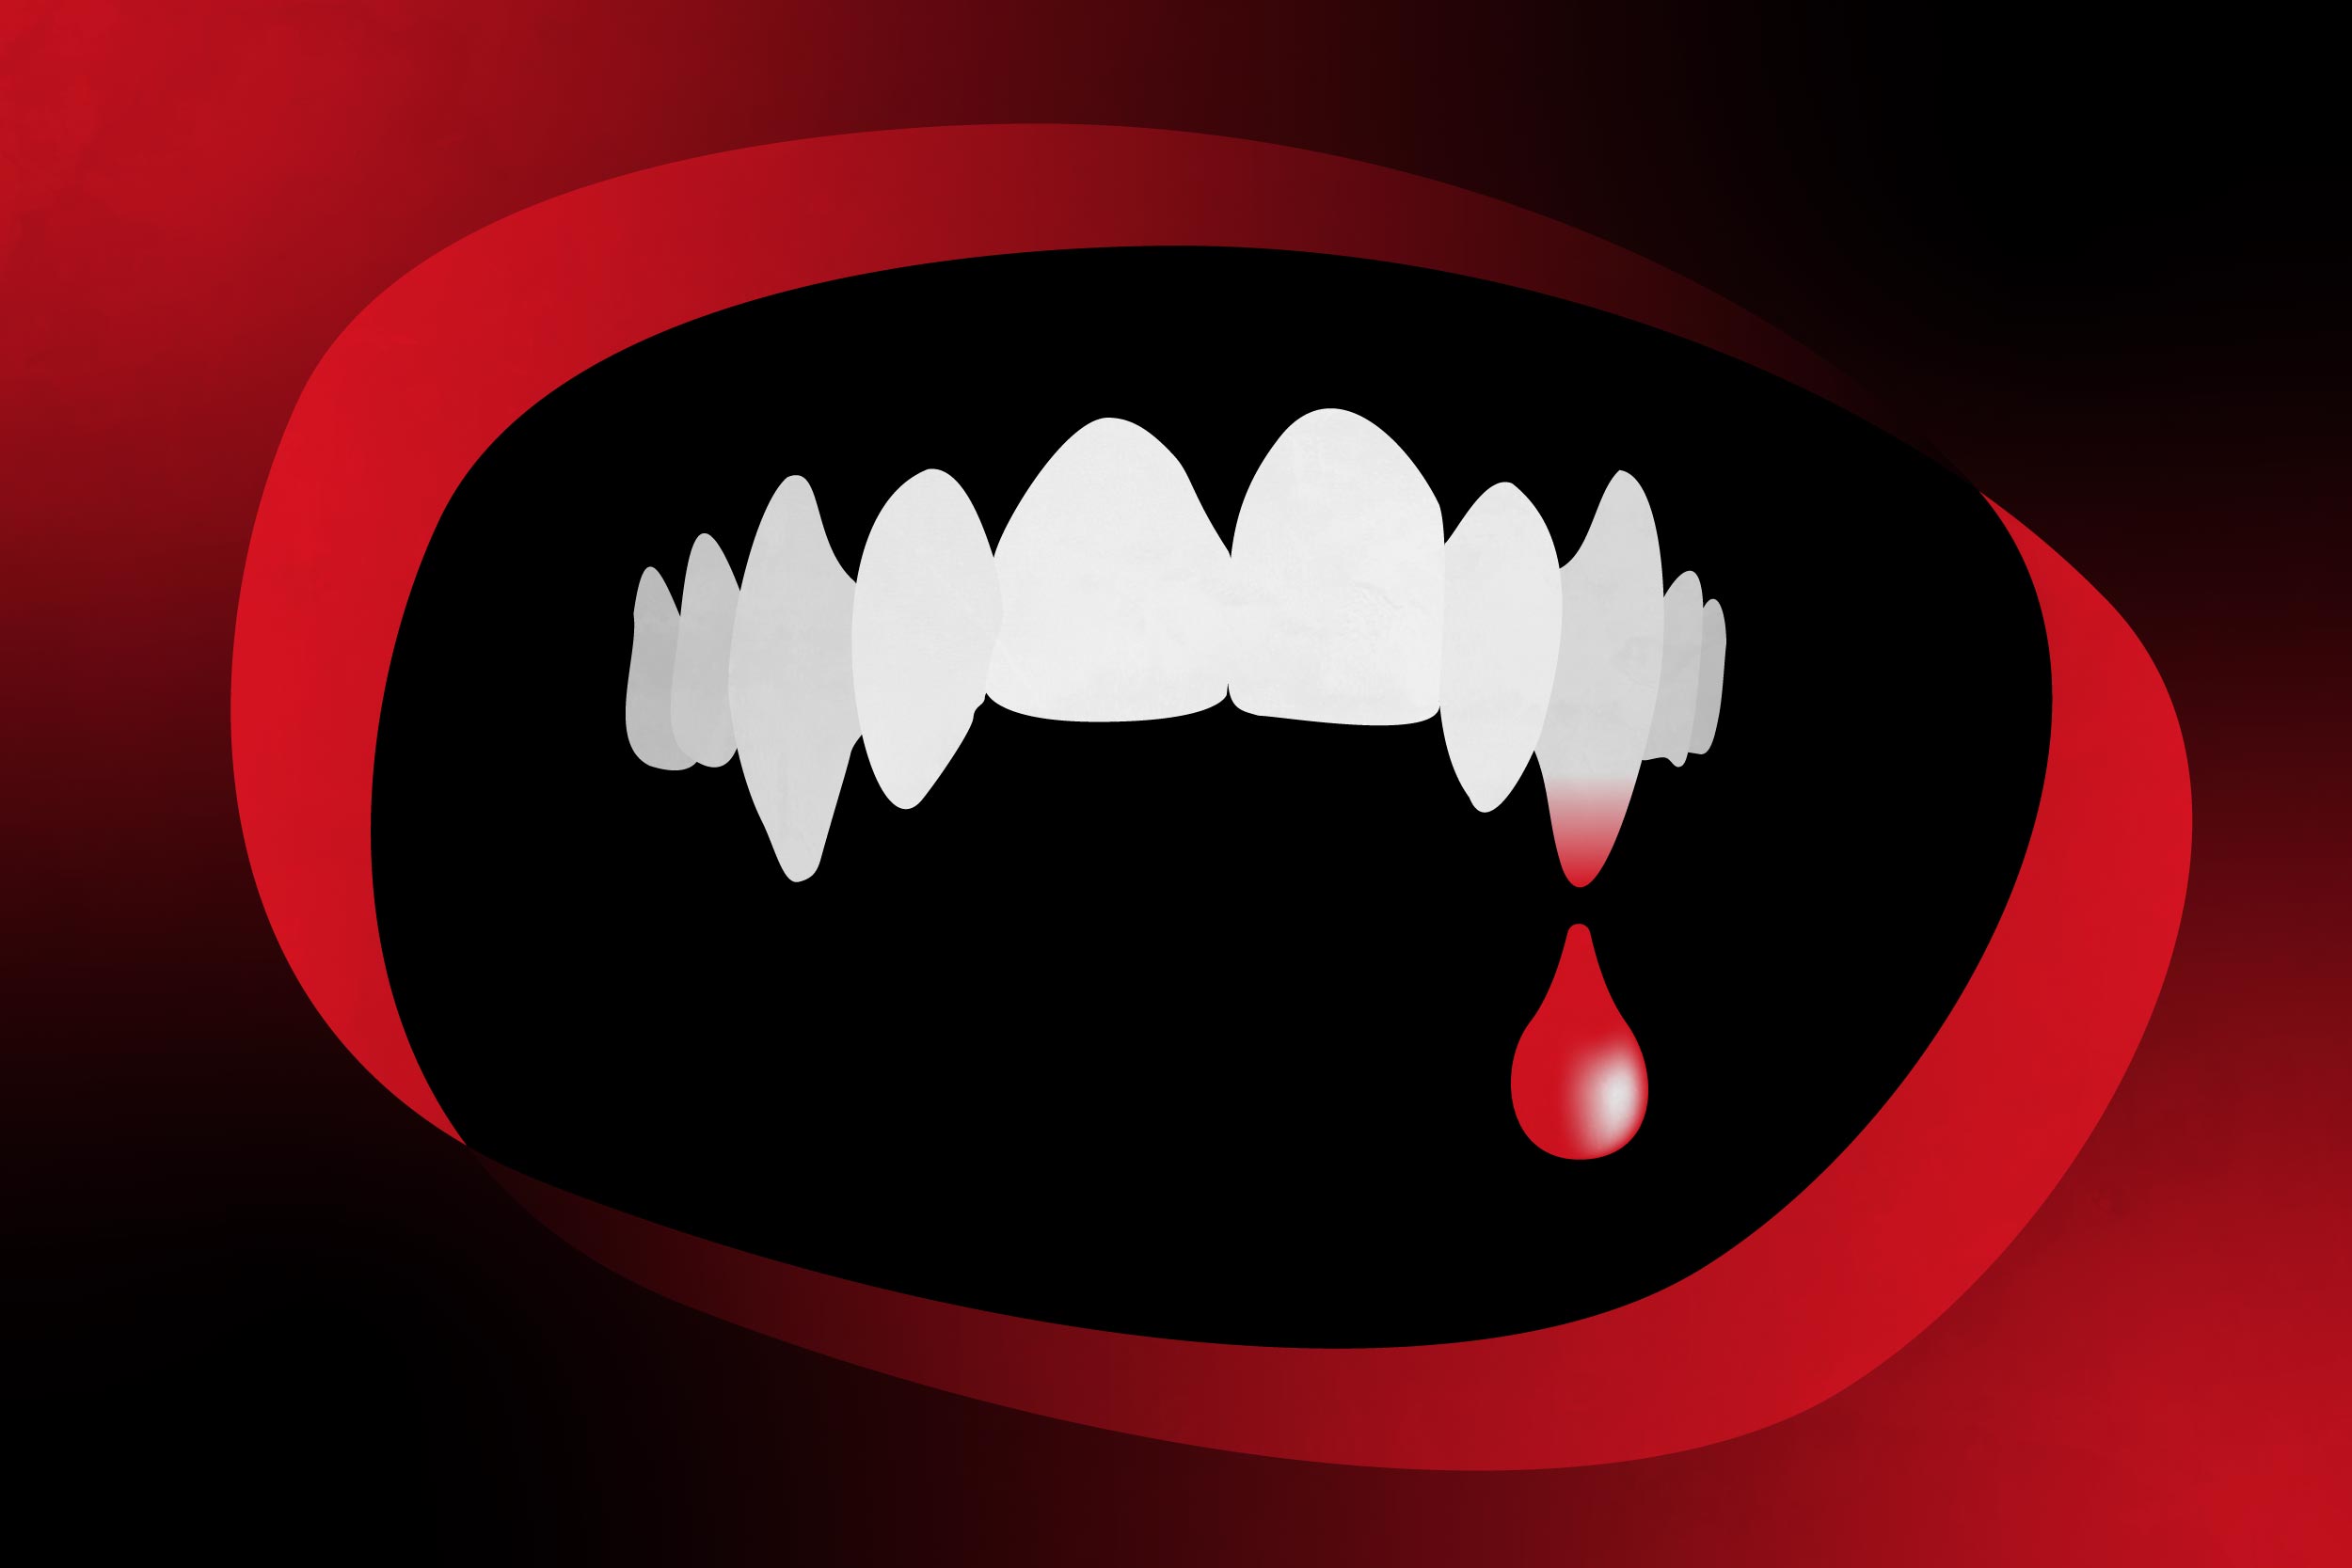 Vampire teeth with blood droplet falling from teeth